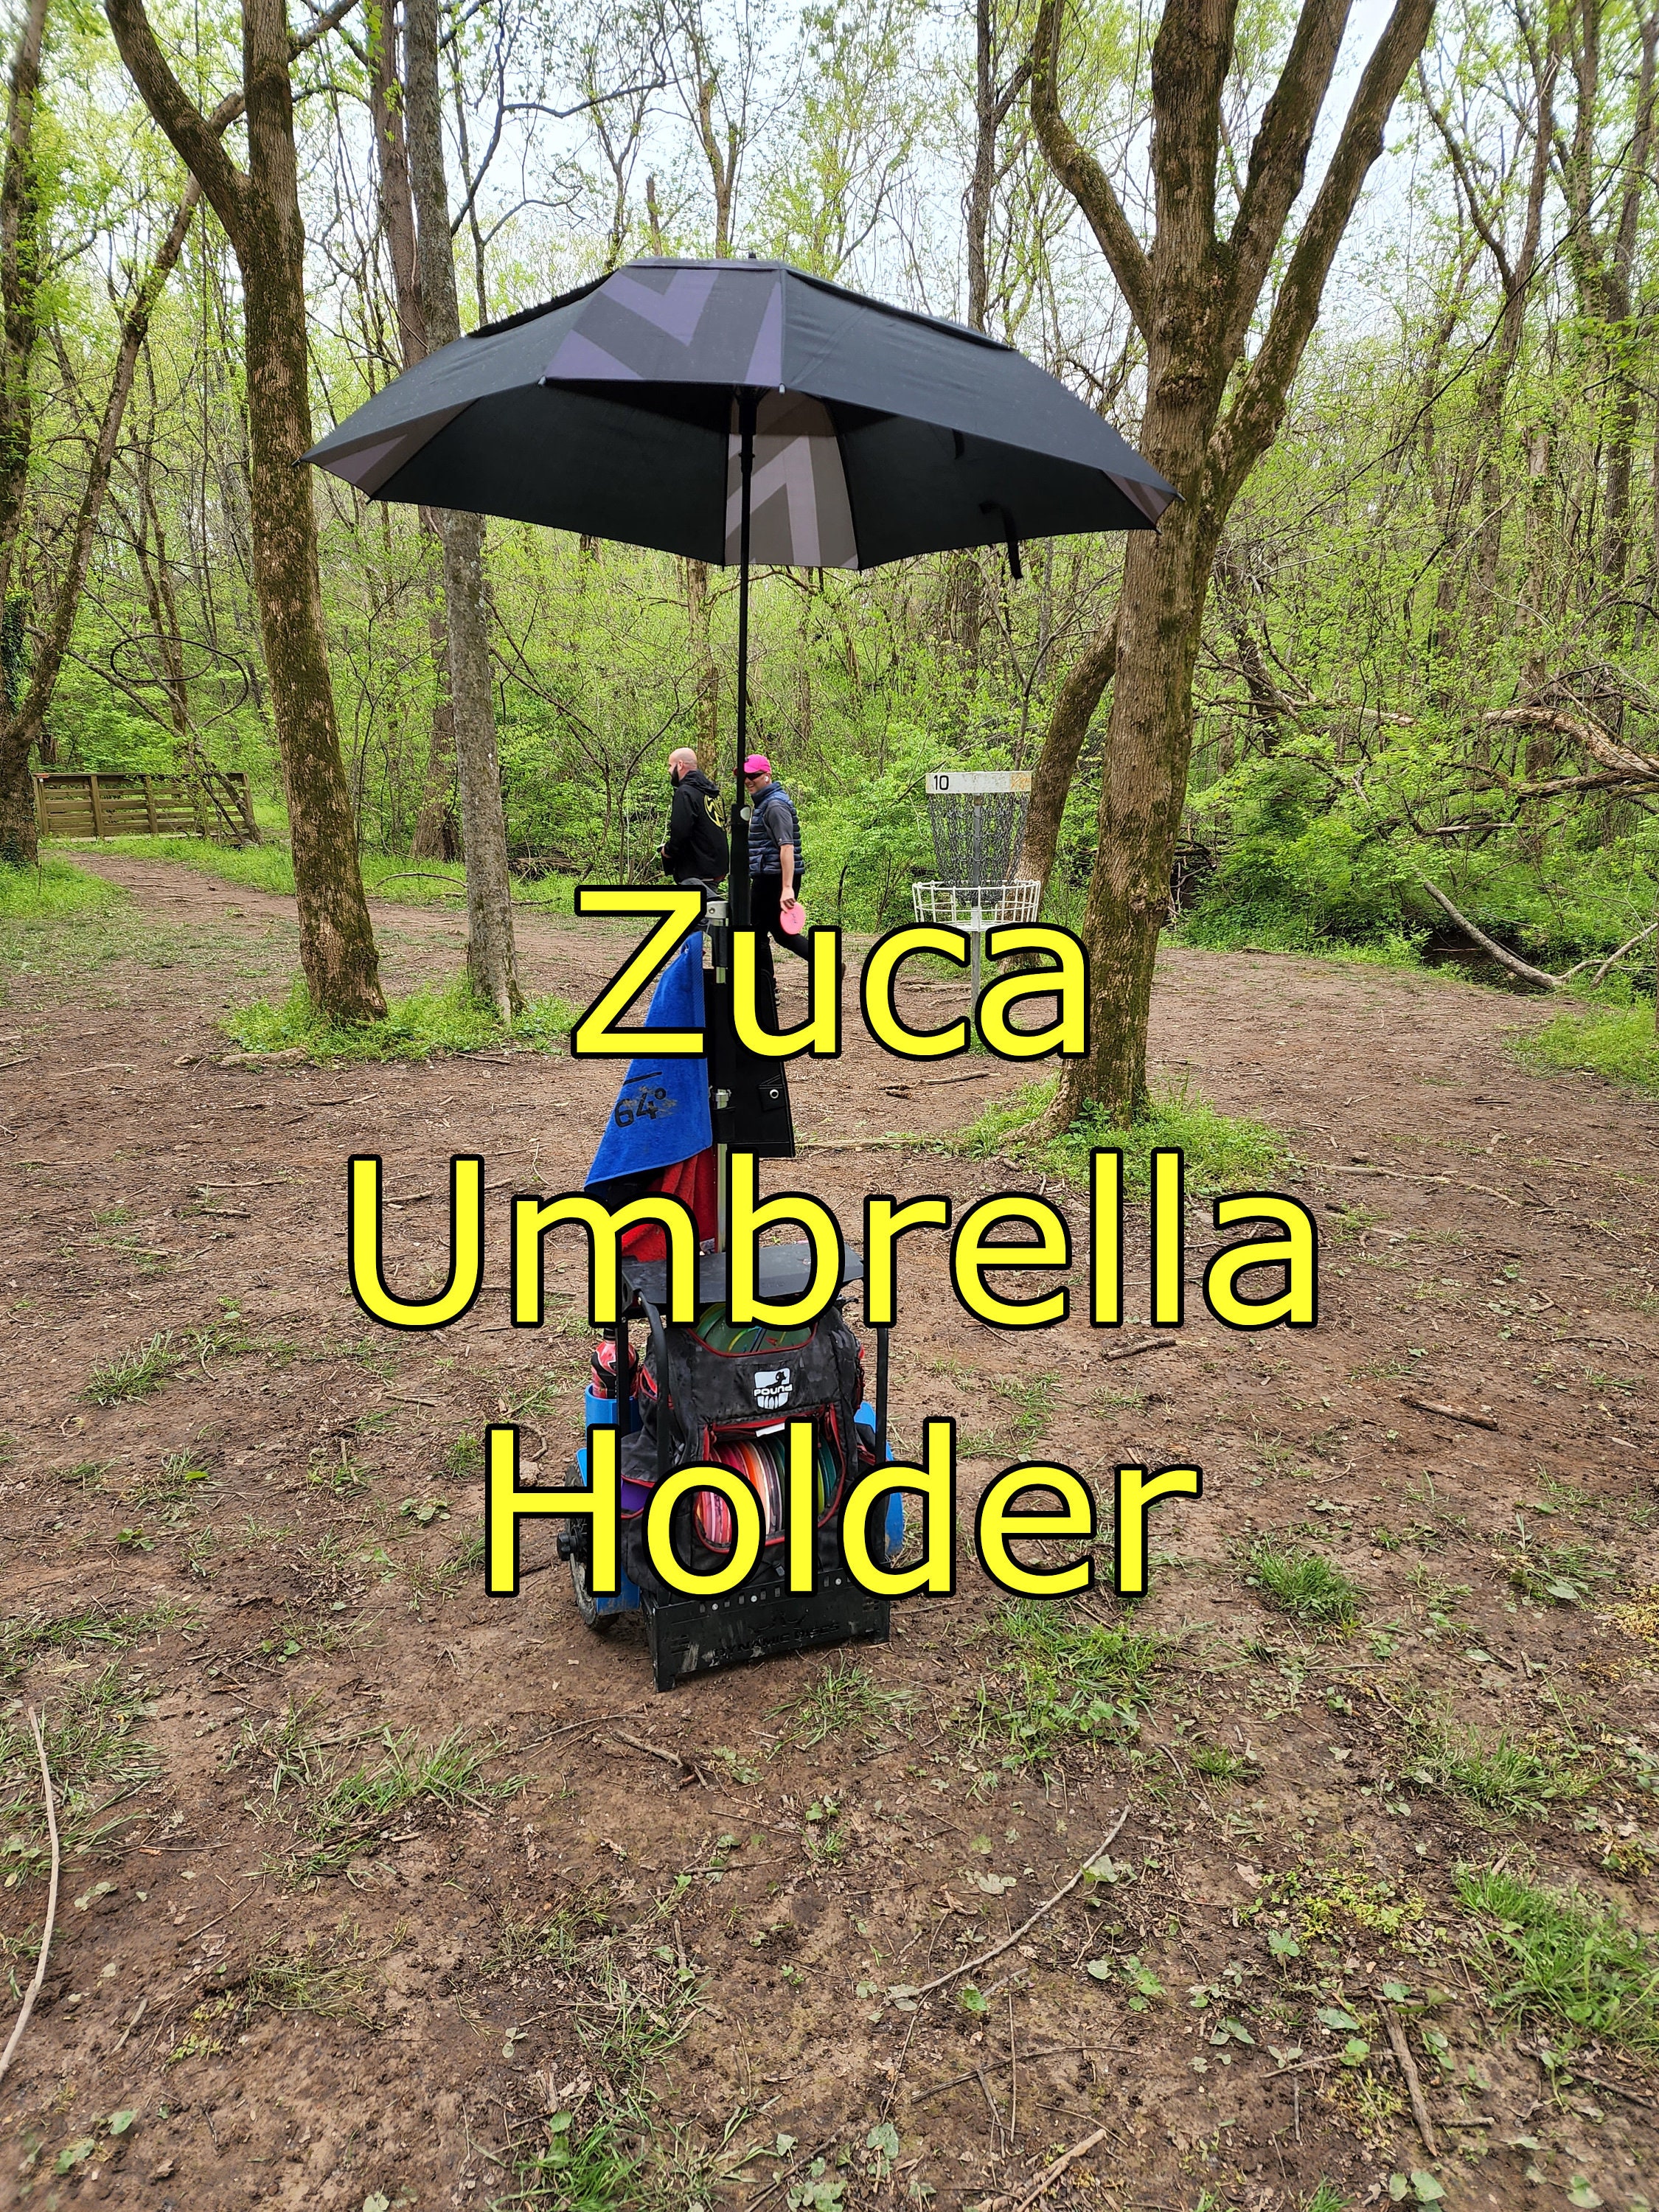 Zuca Cart Umbrella Holder Convenient Holder to Keep You